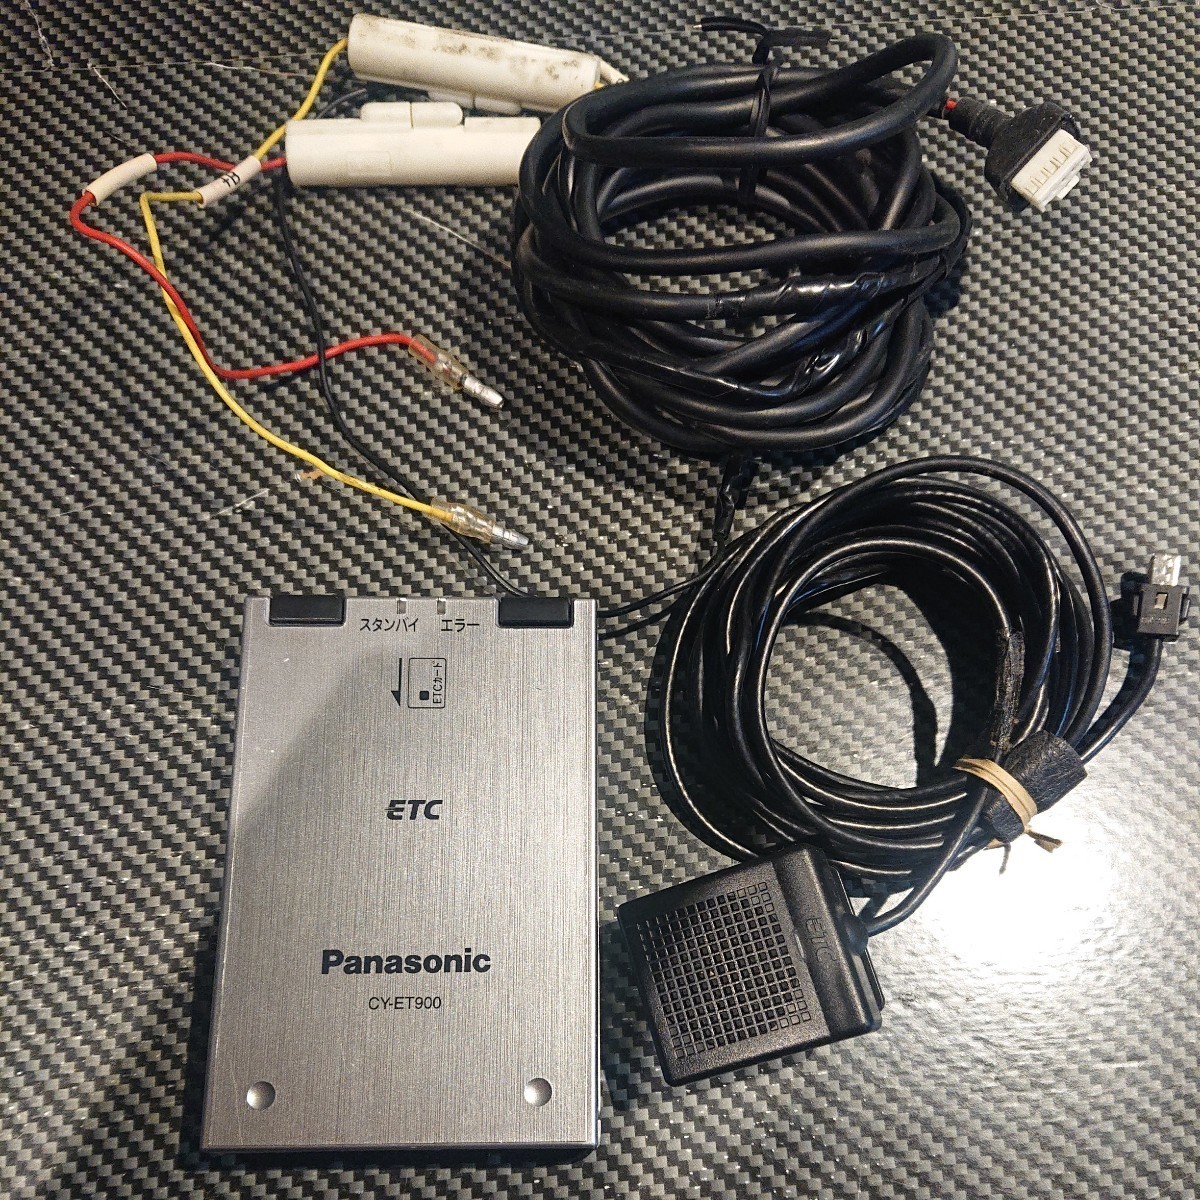 Panasonic ETC ( Panasonic CY-ET900)